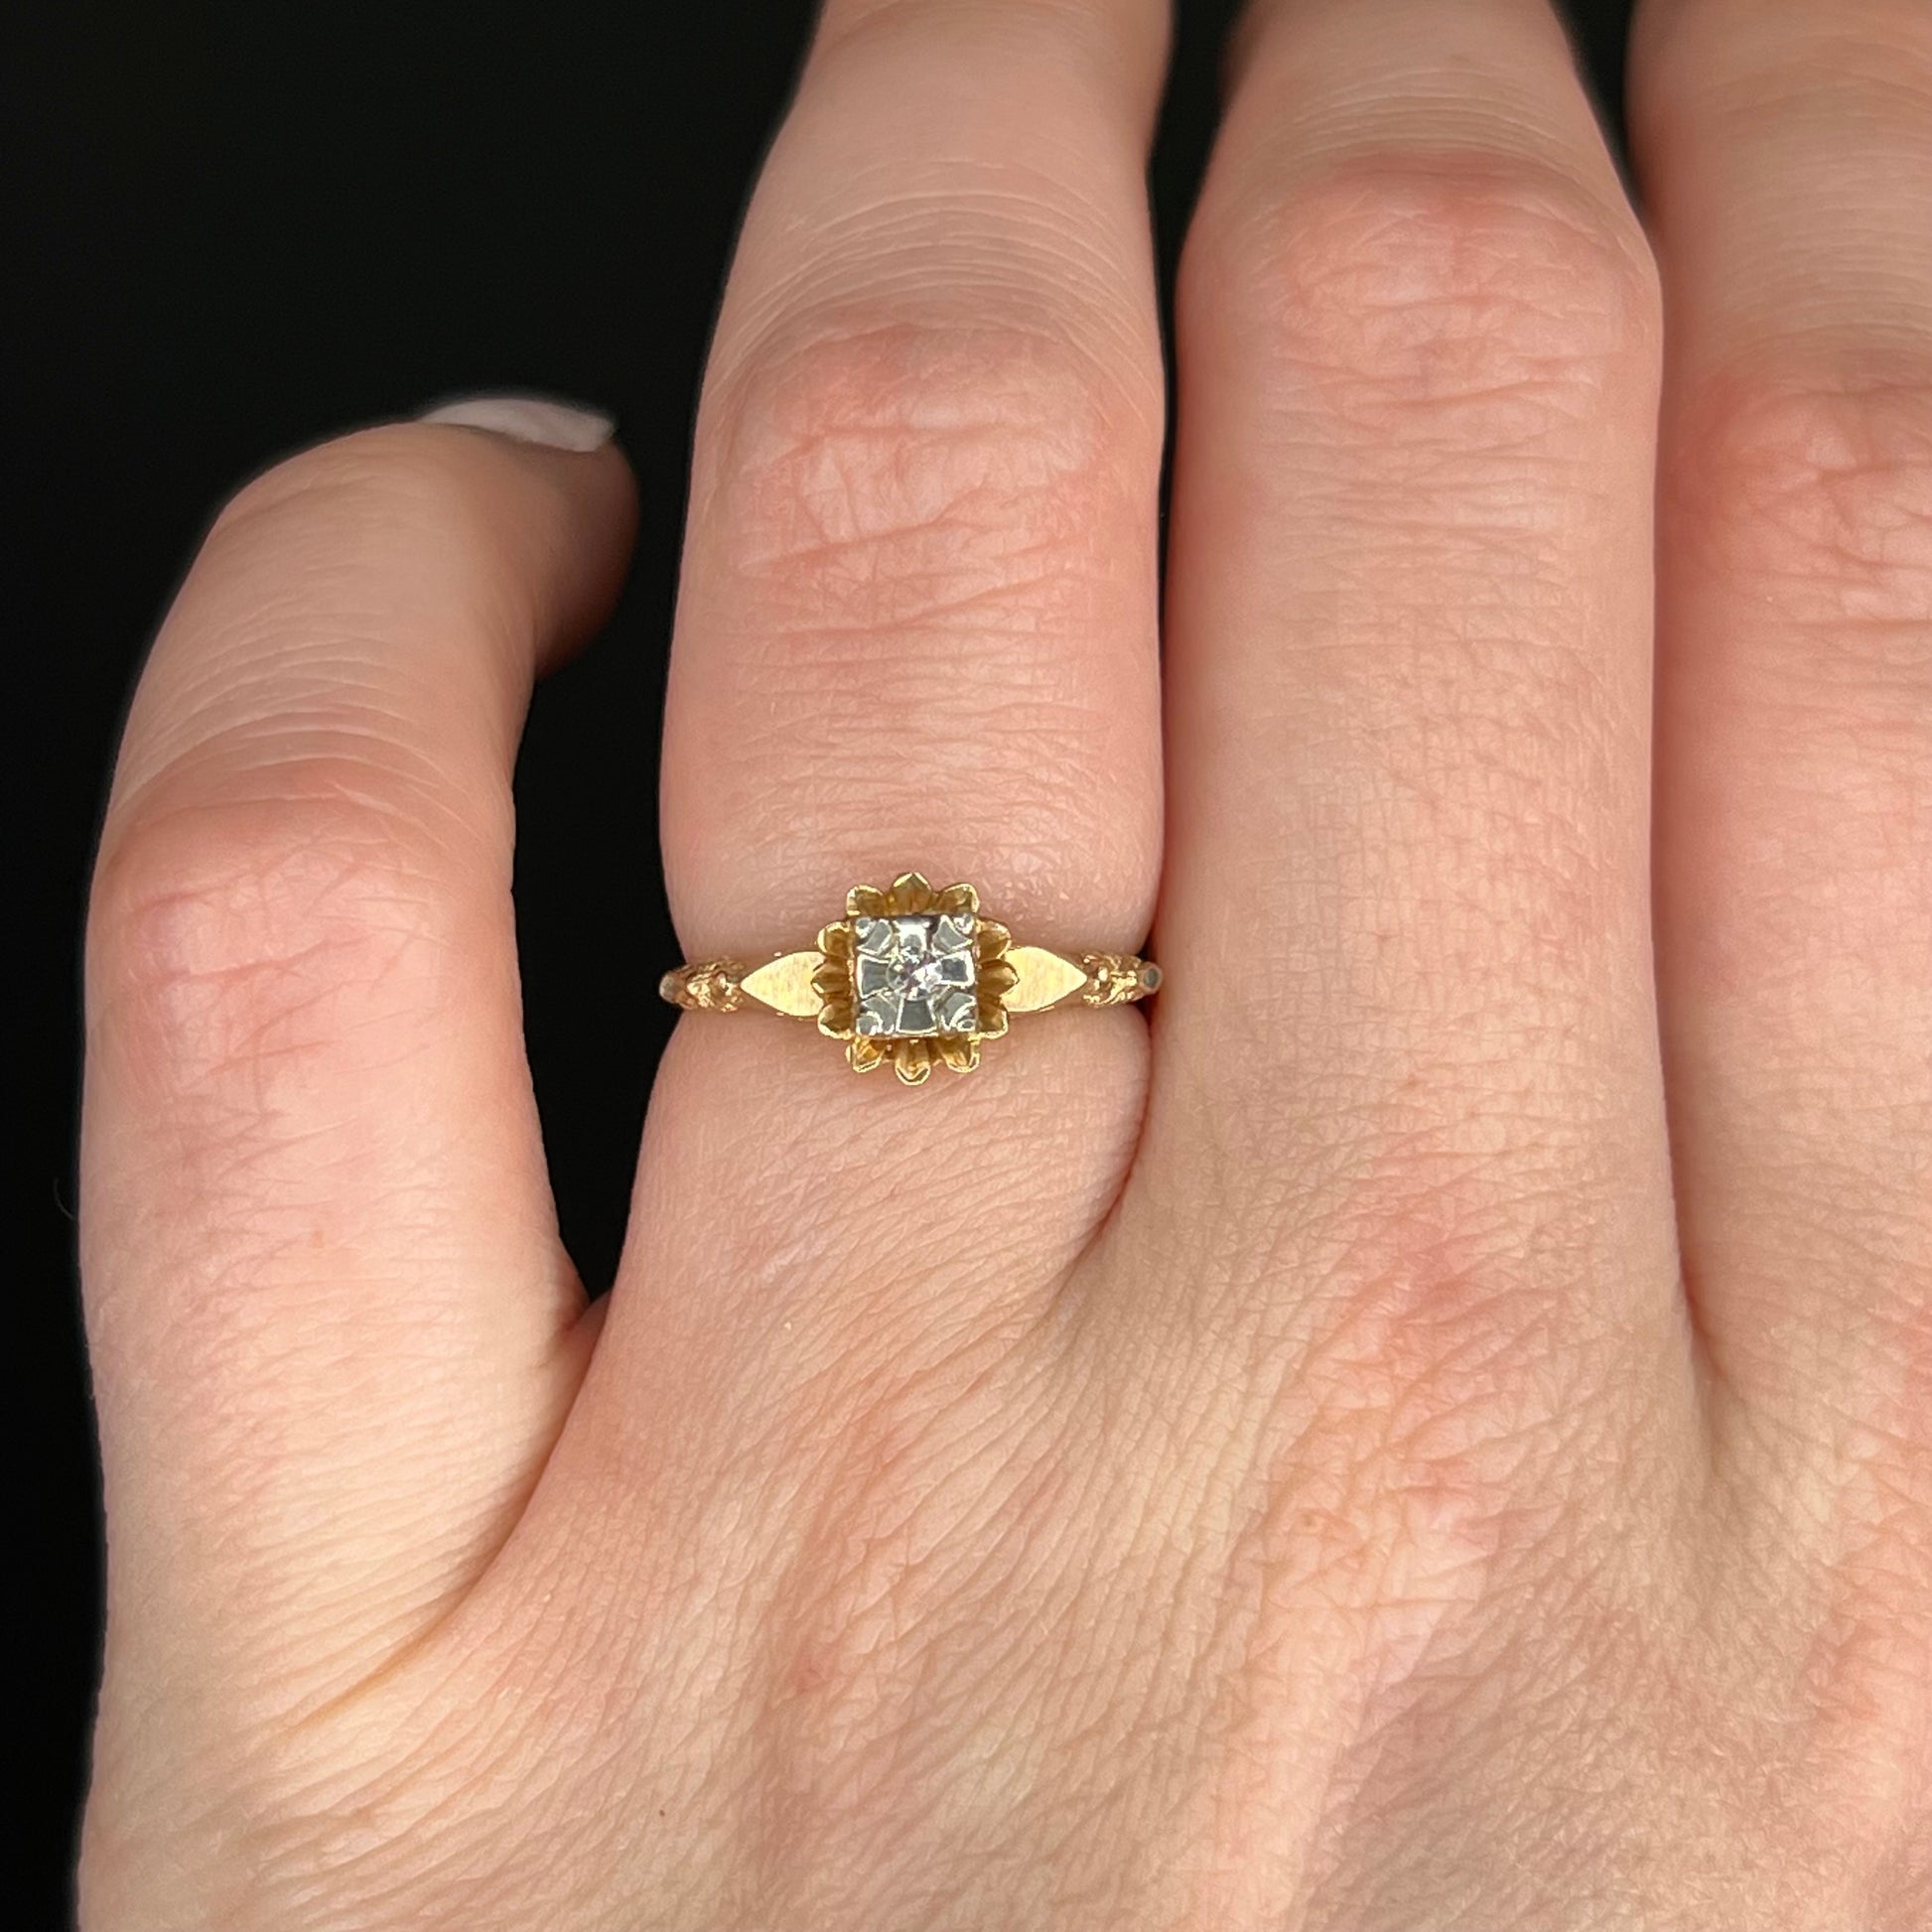 Delicate Retro Diamond Engagement Ring in 14k & 18k Gold